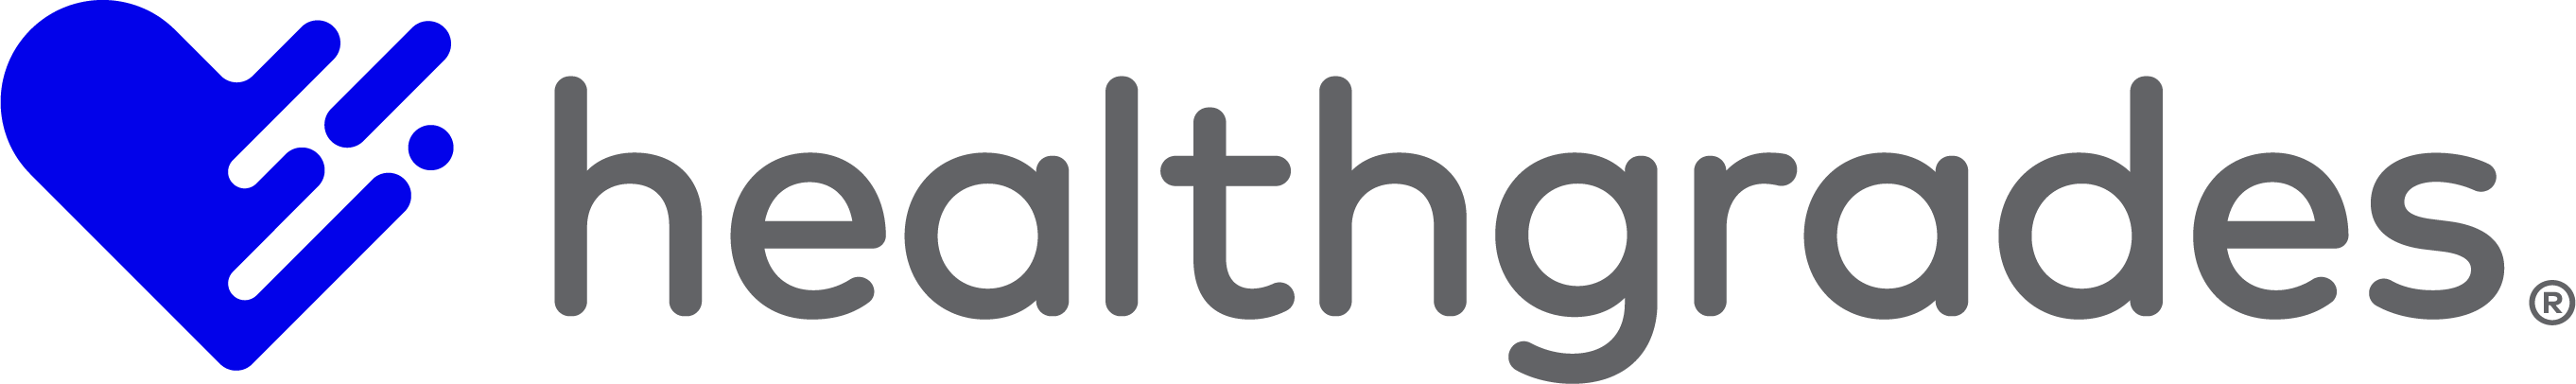 Health Grades logo